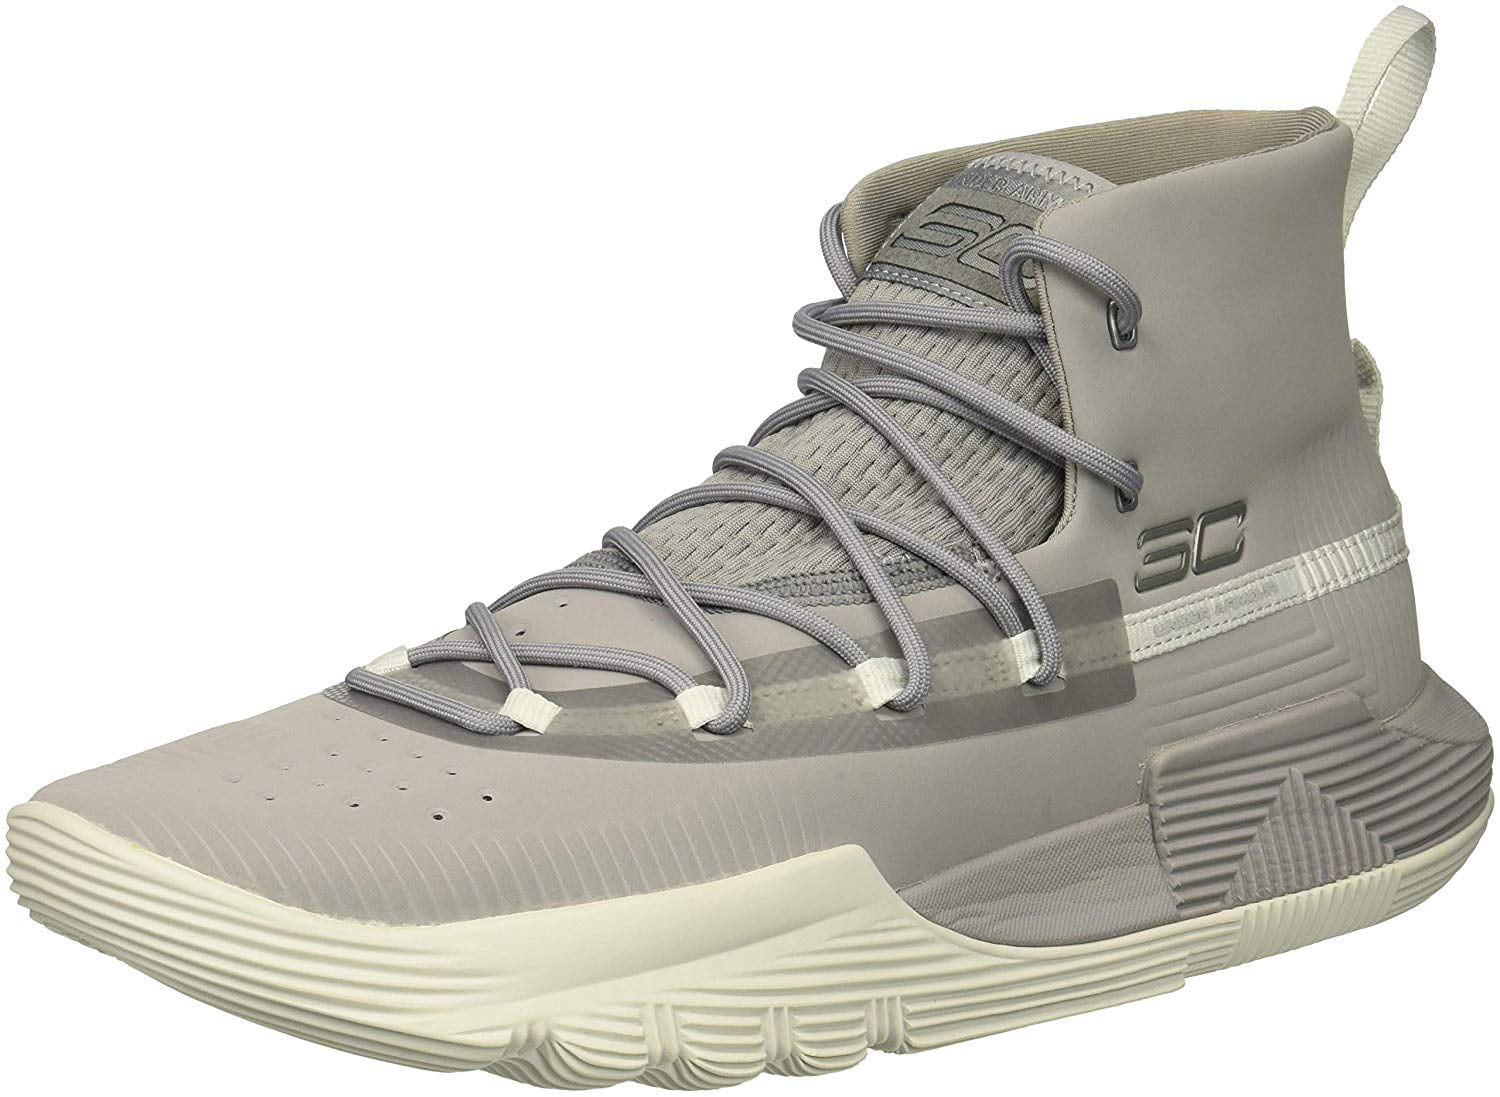 men's sc 3zer0 ii basketball shoe